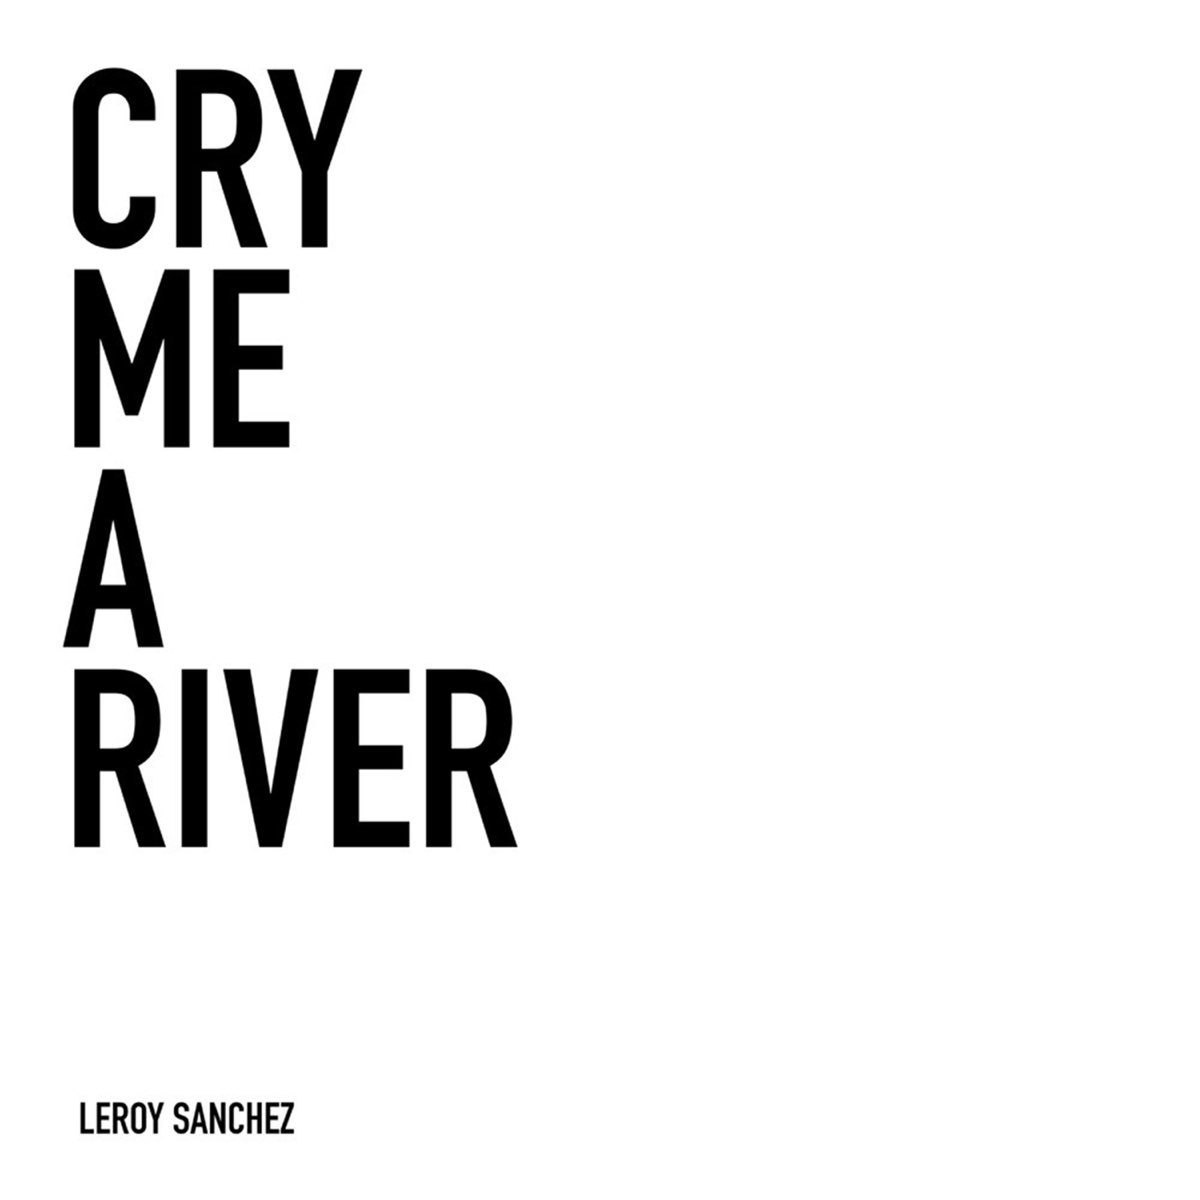 Cry me a river. Cry me a River обложка. Песня Cry me a River. Cry me a River певец.